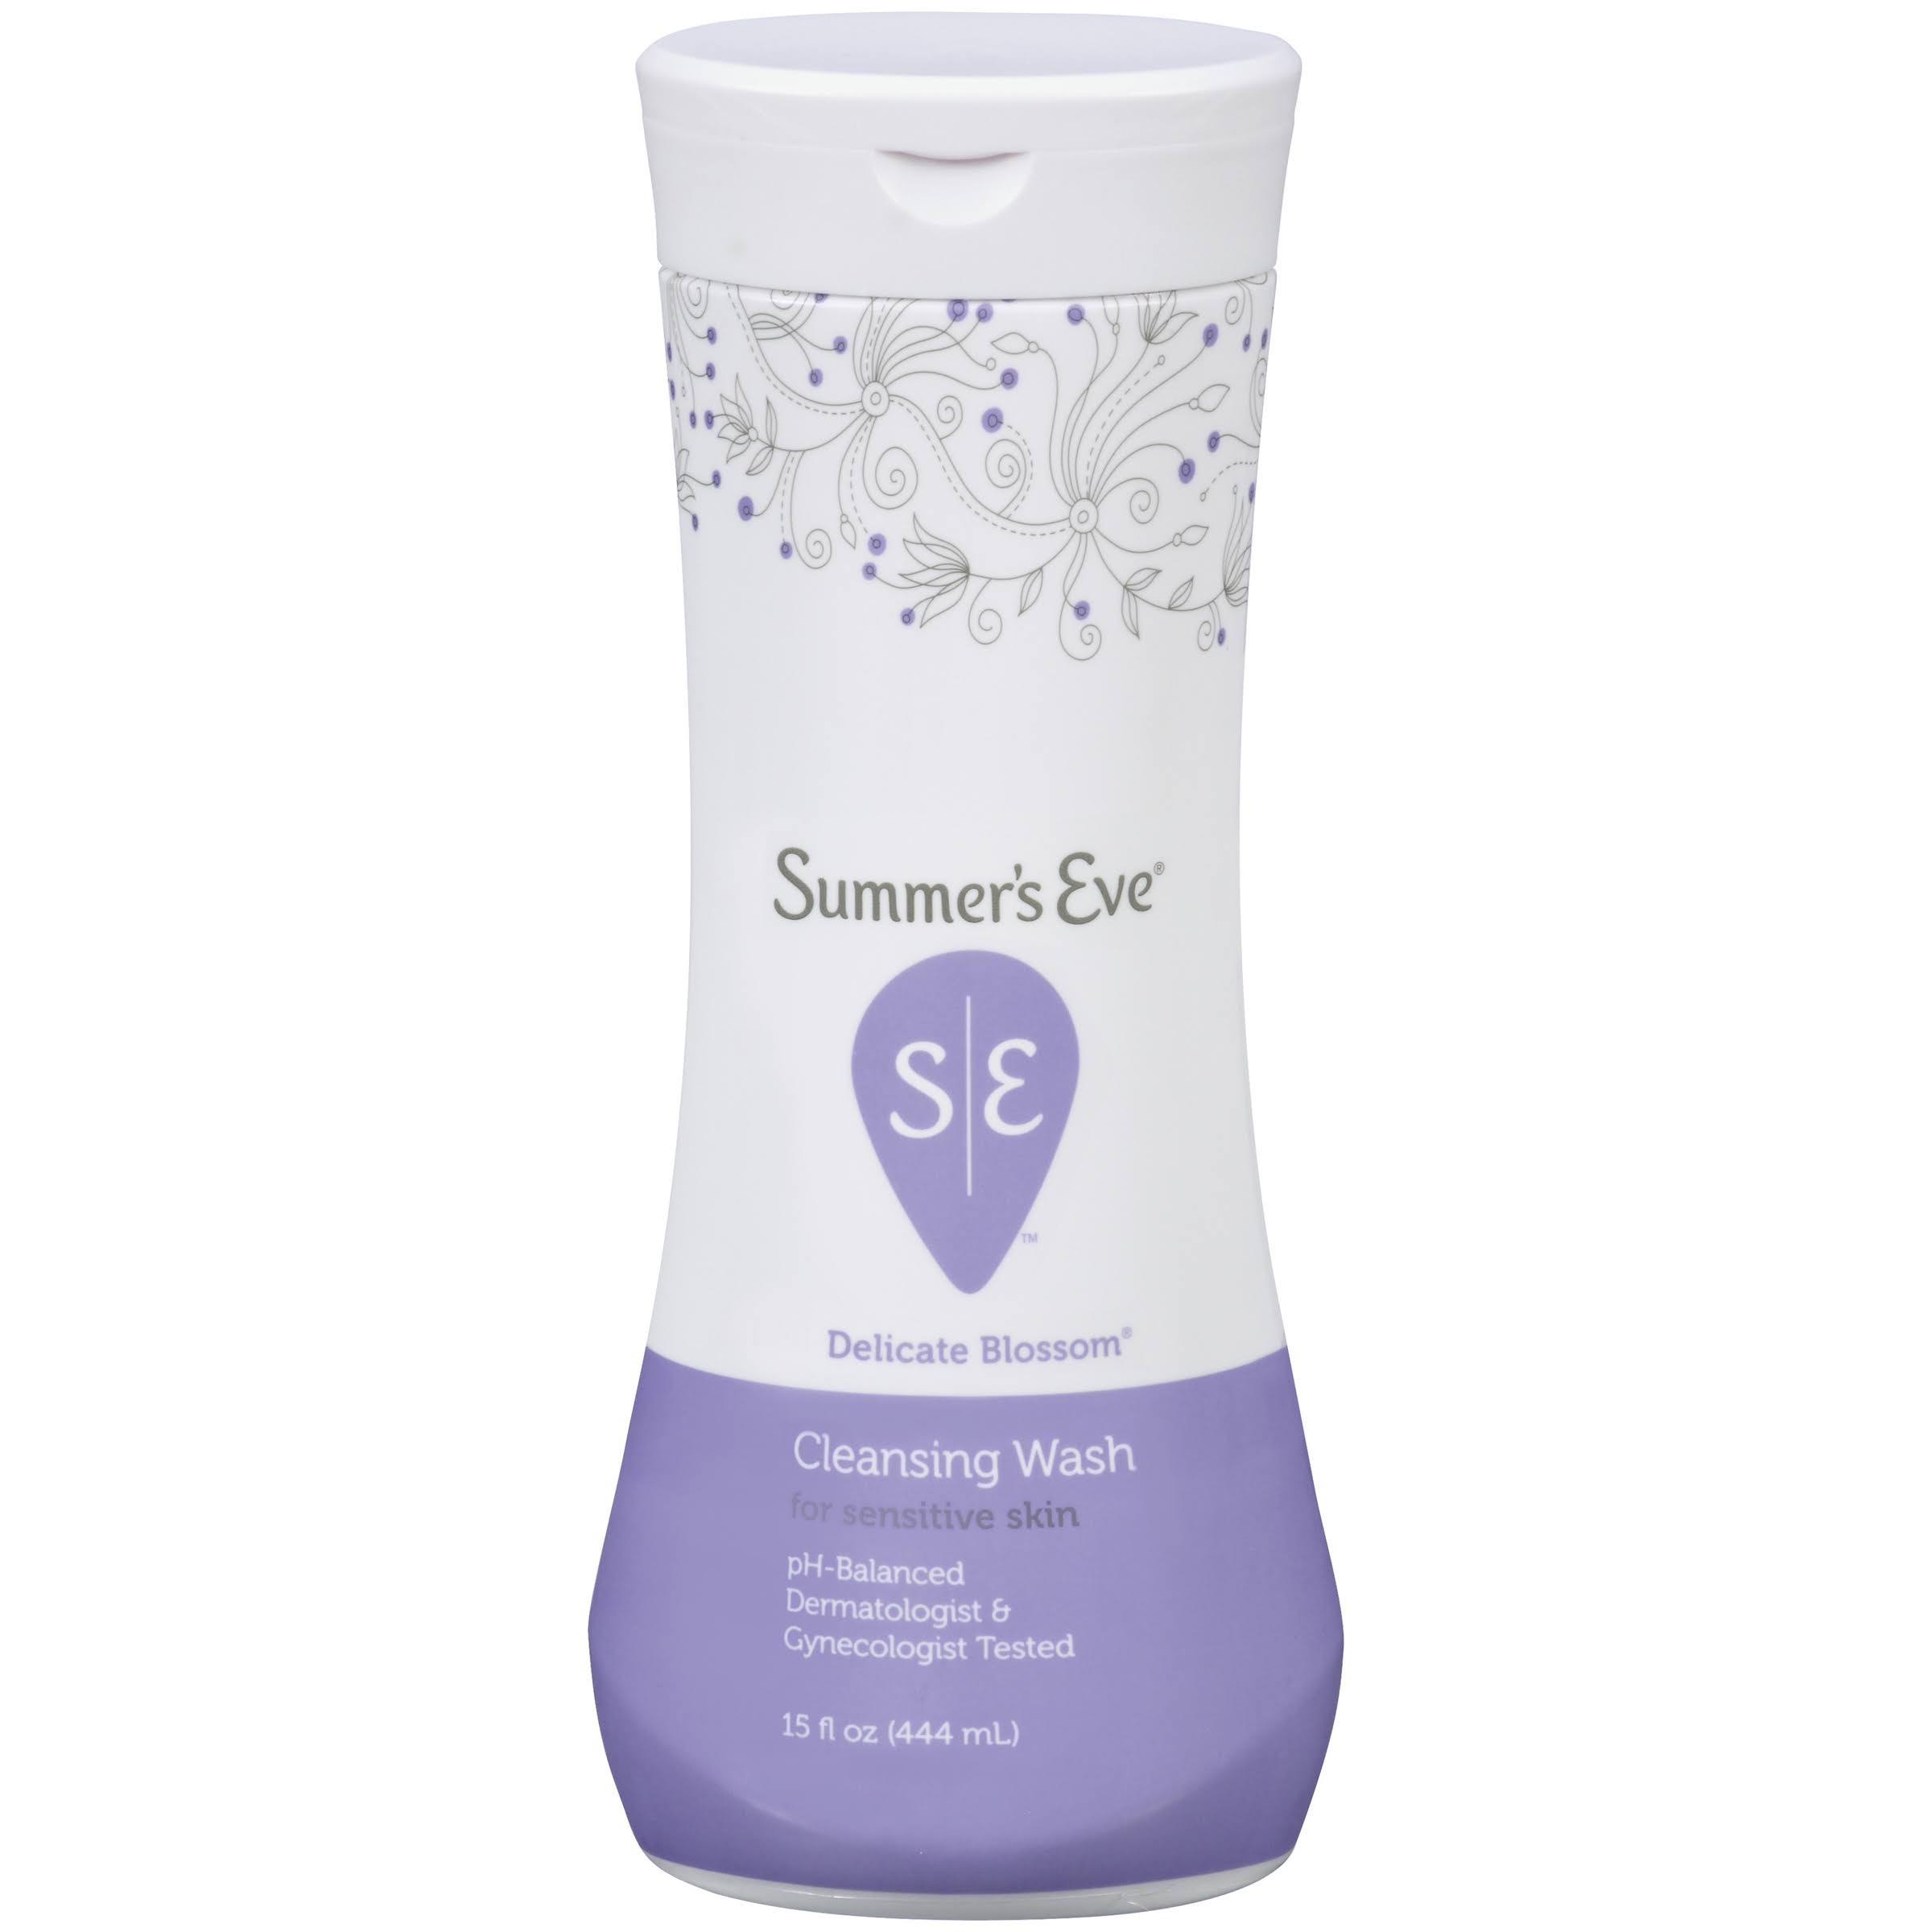 Summer's Eve Cleansing Wash - for Sensitive Skin, Delicate Blossom, 15oz